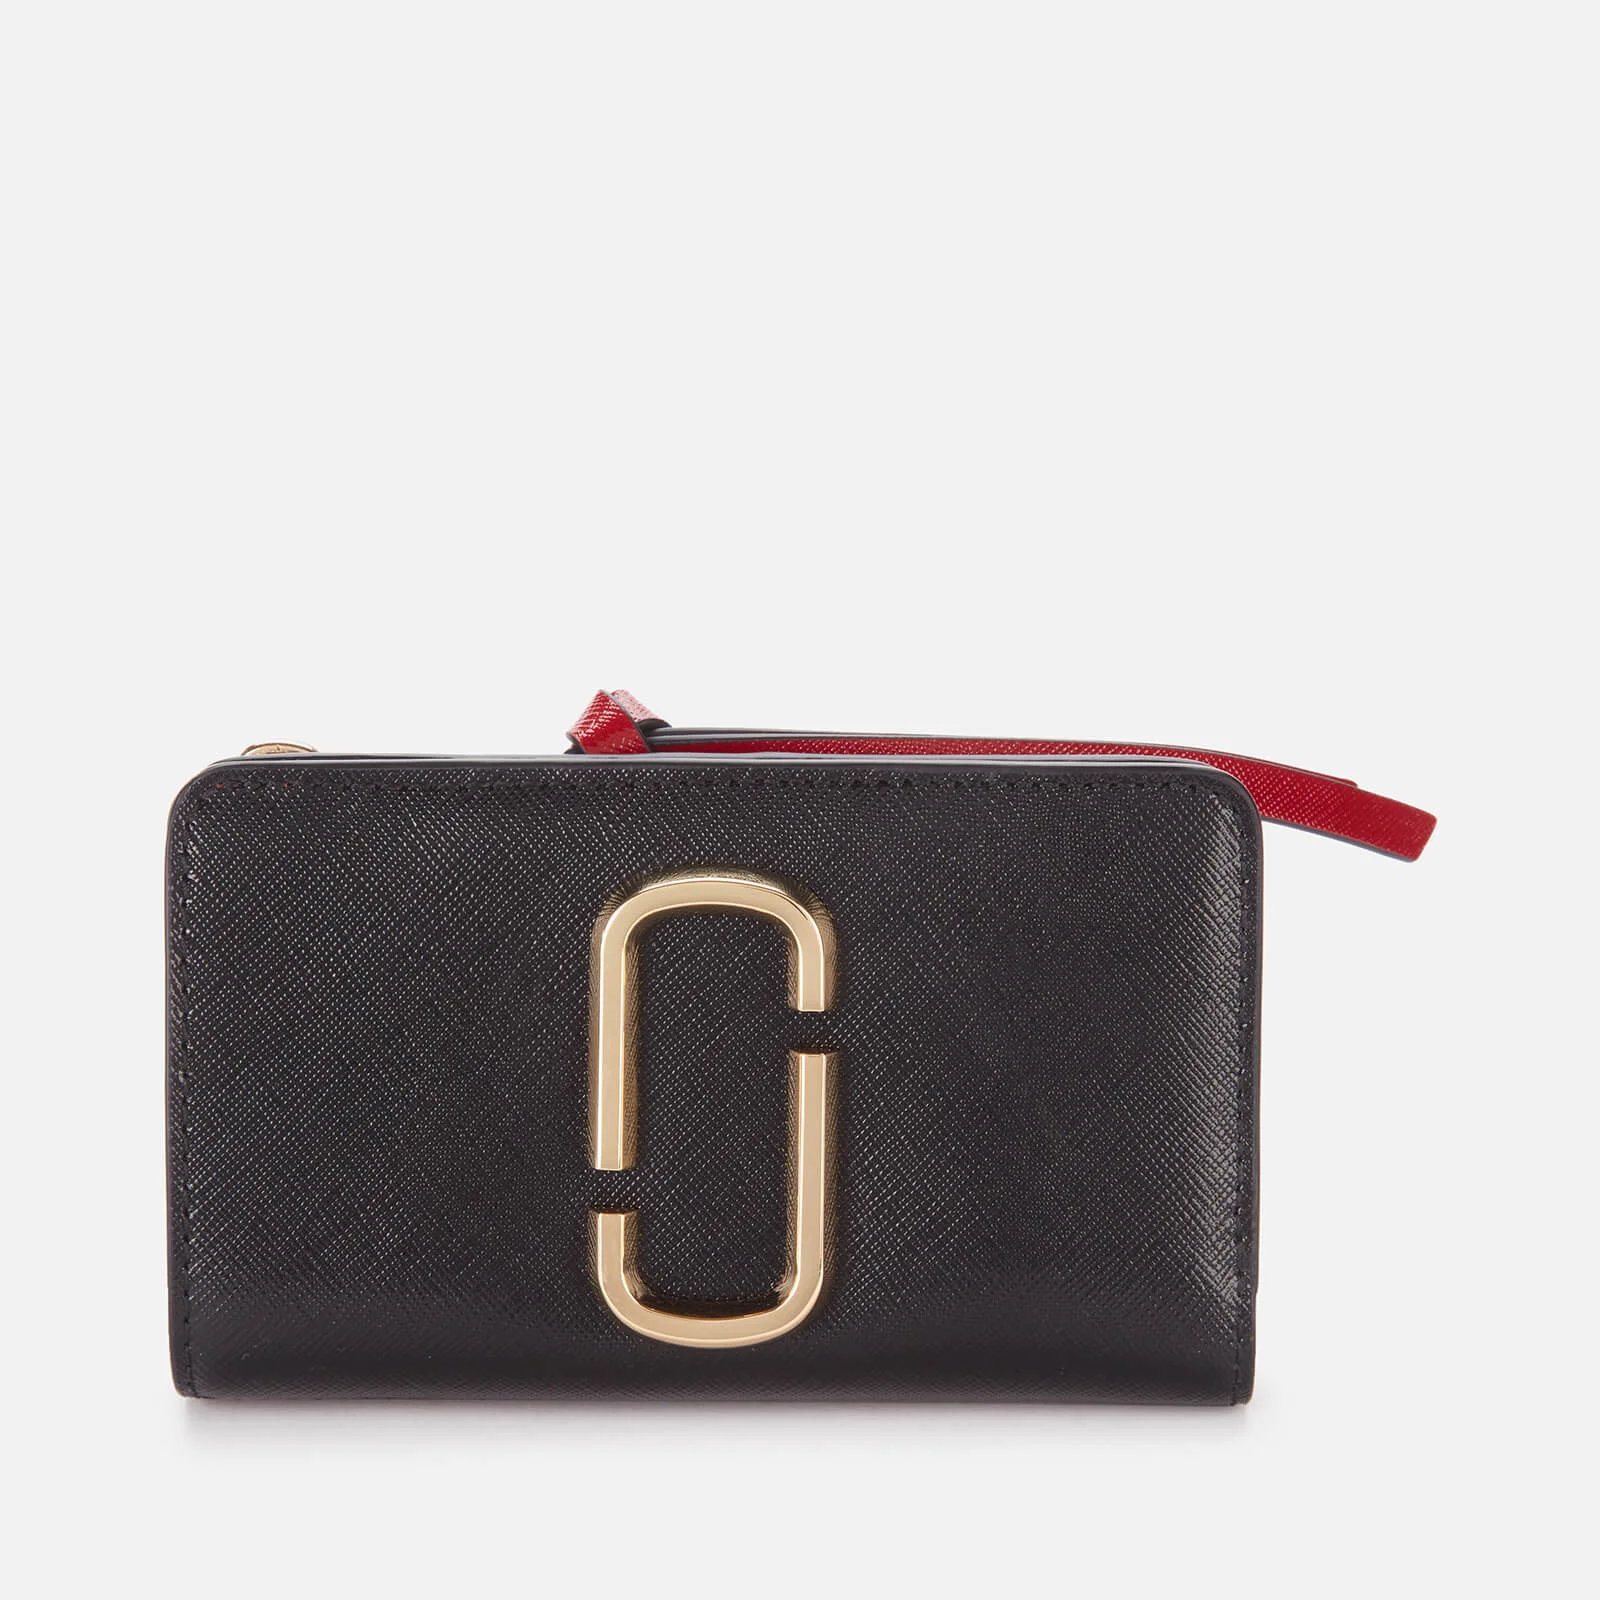 Marc Jacobs Women's Compact Wallet - Black/Chianti Image 1